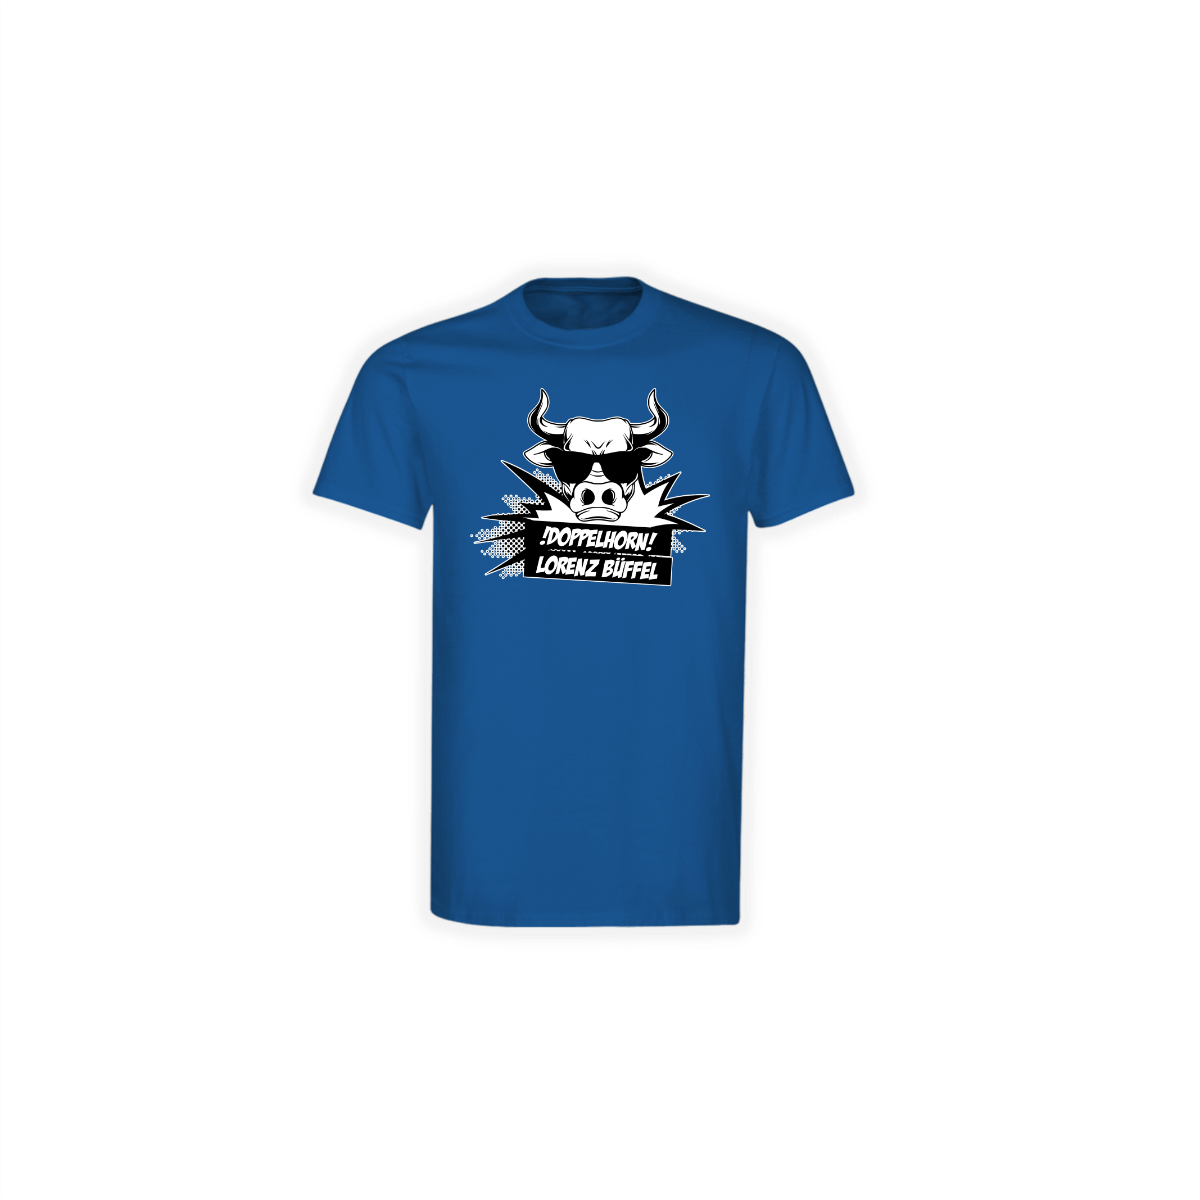 T-Shirt "DOPPELHORN" blau